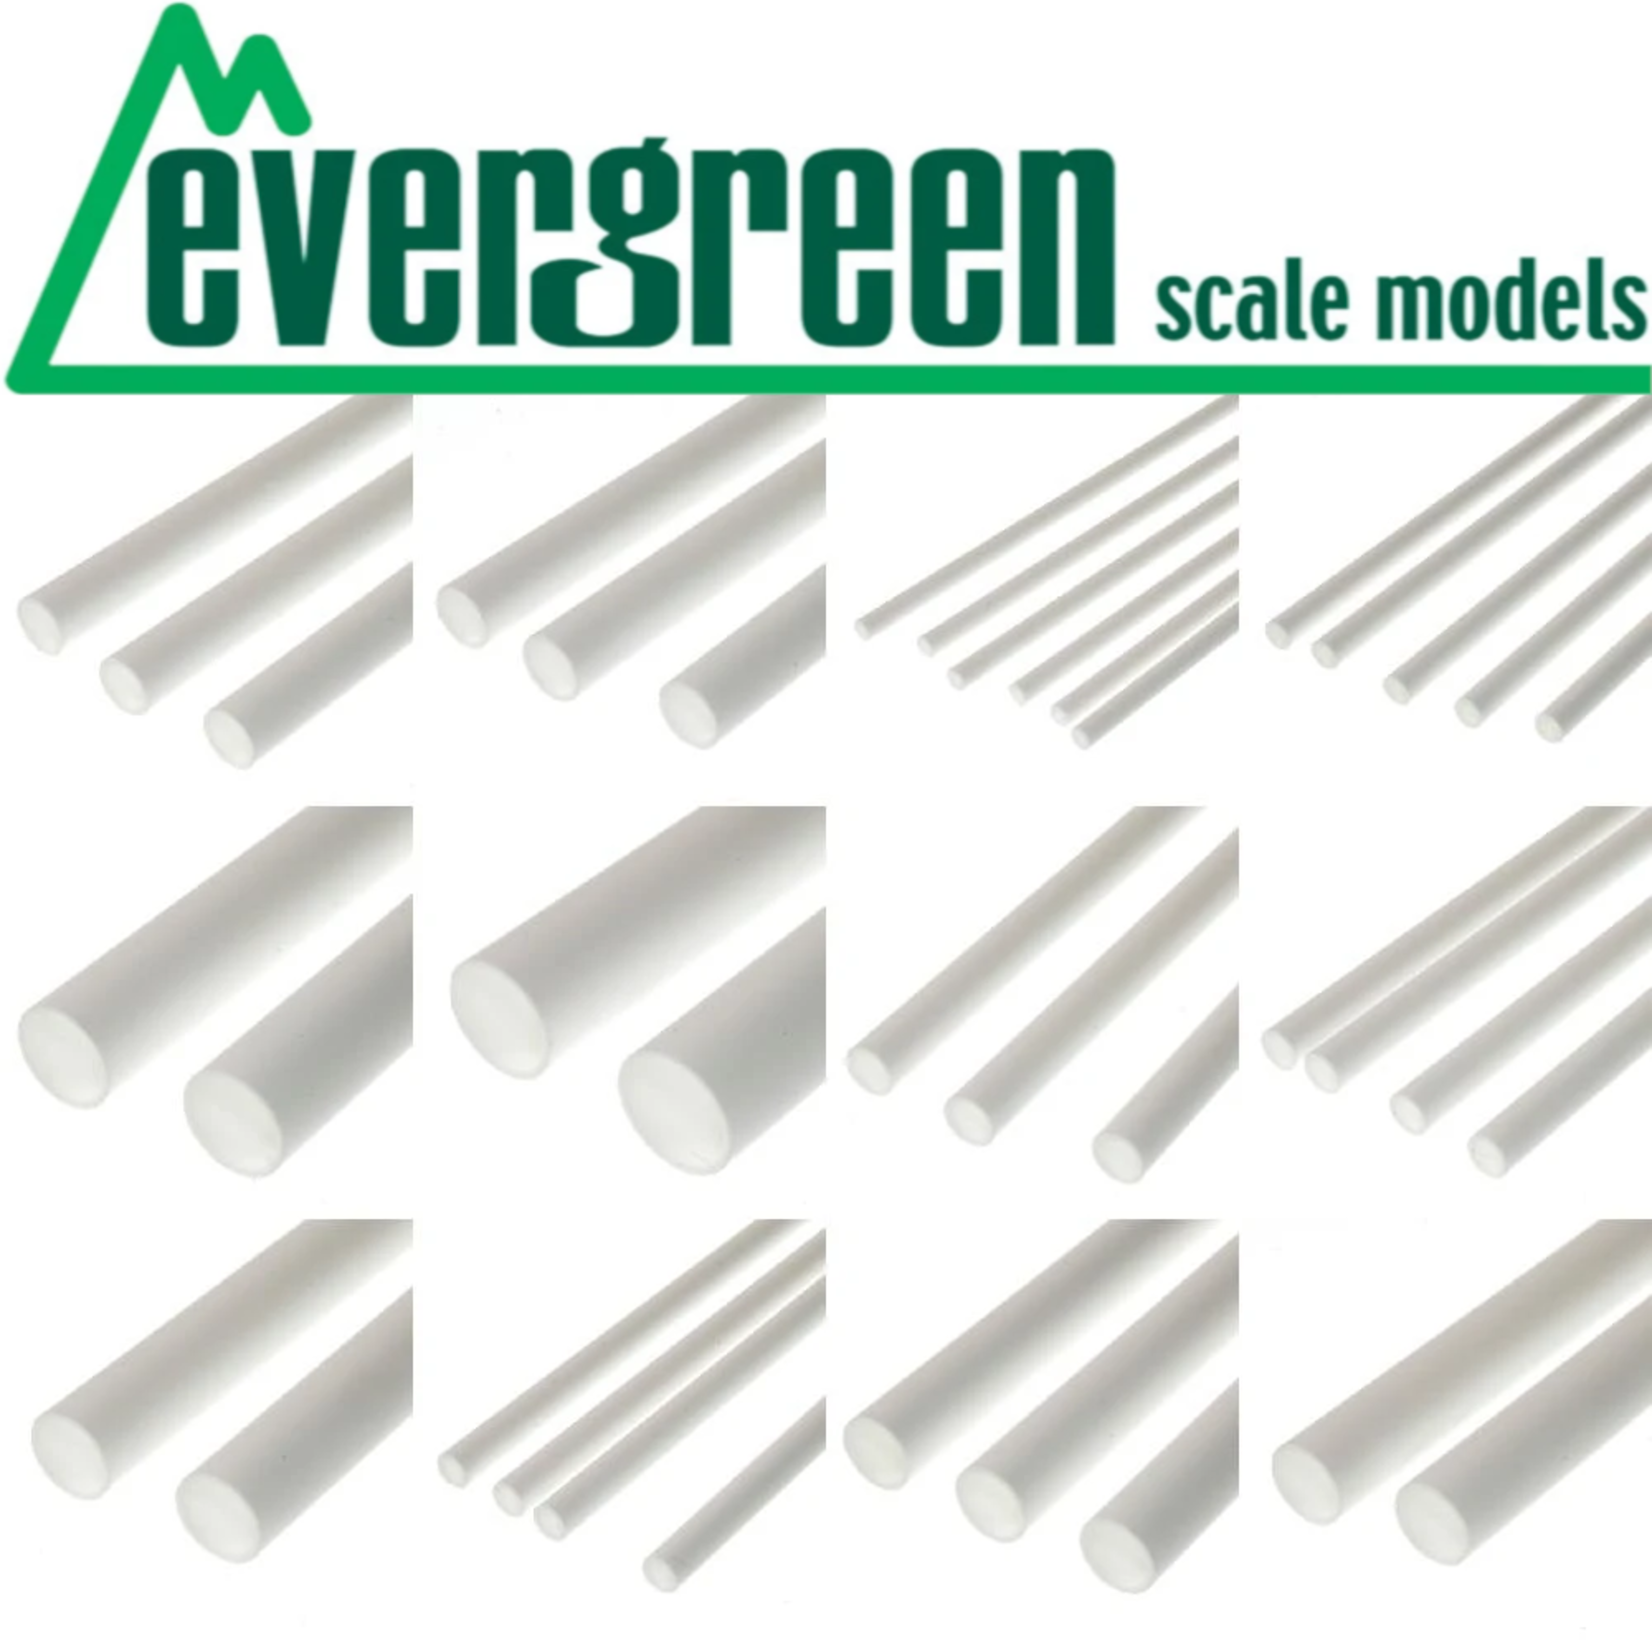 Evergreen Scale Models EVE145 Styrene .040x.100 Strip (10pc)